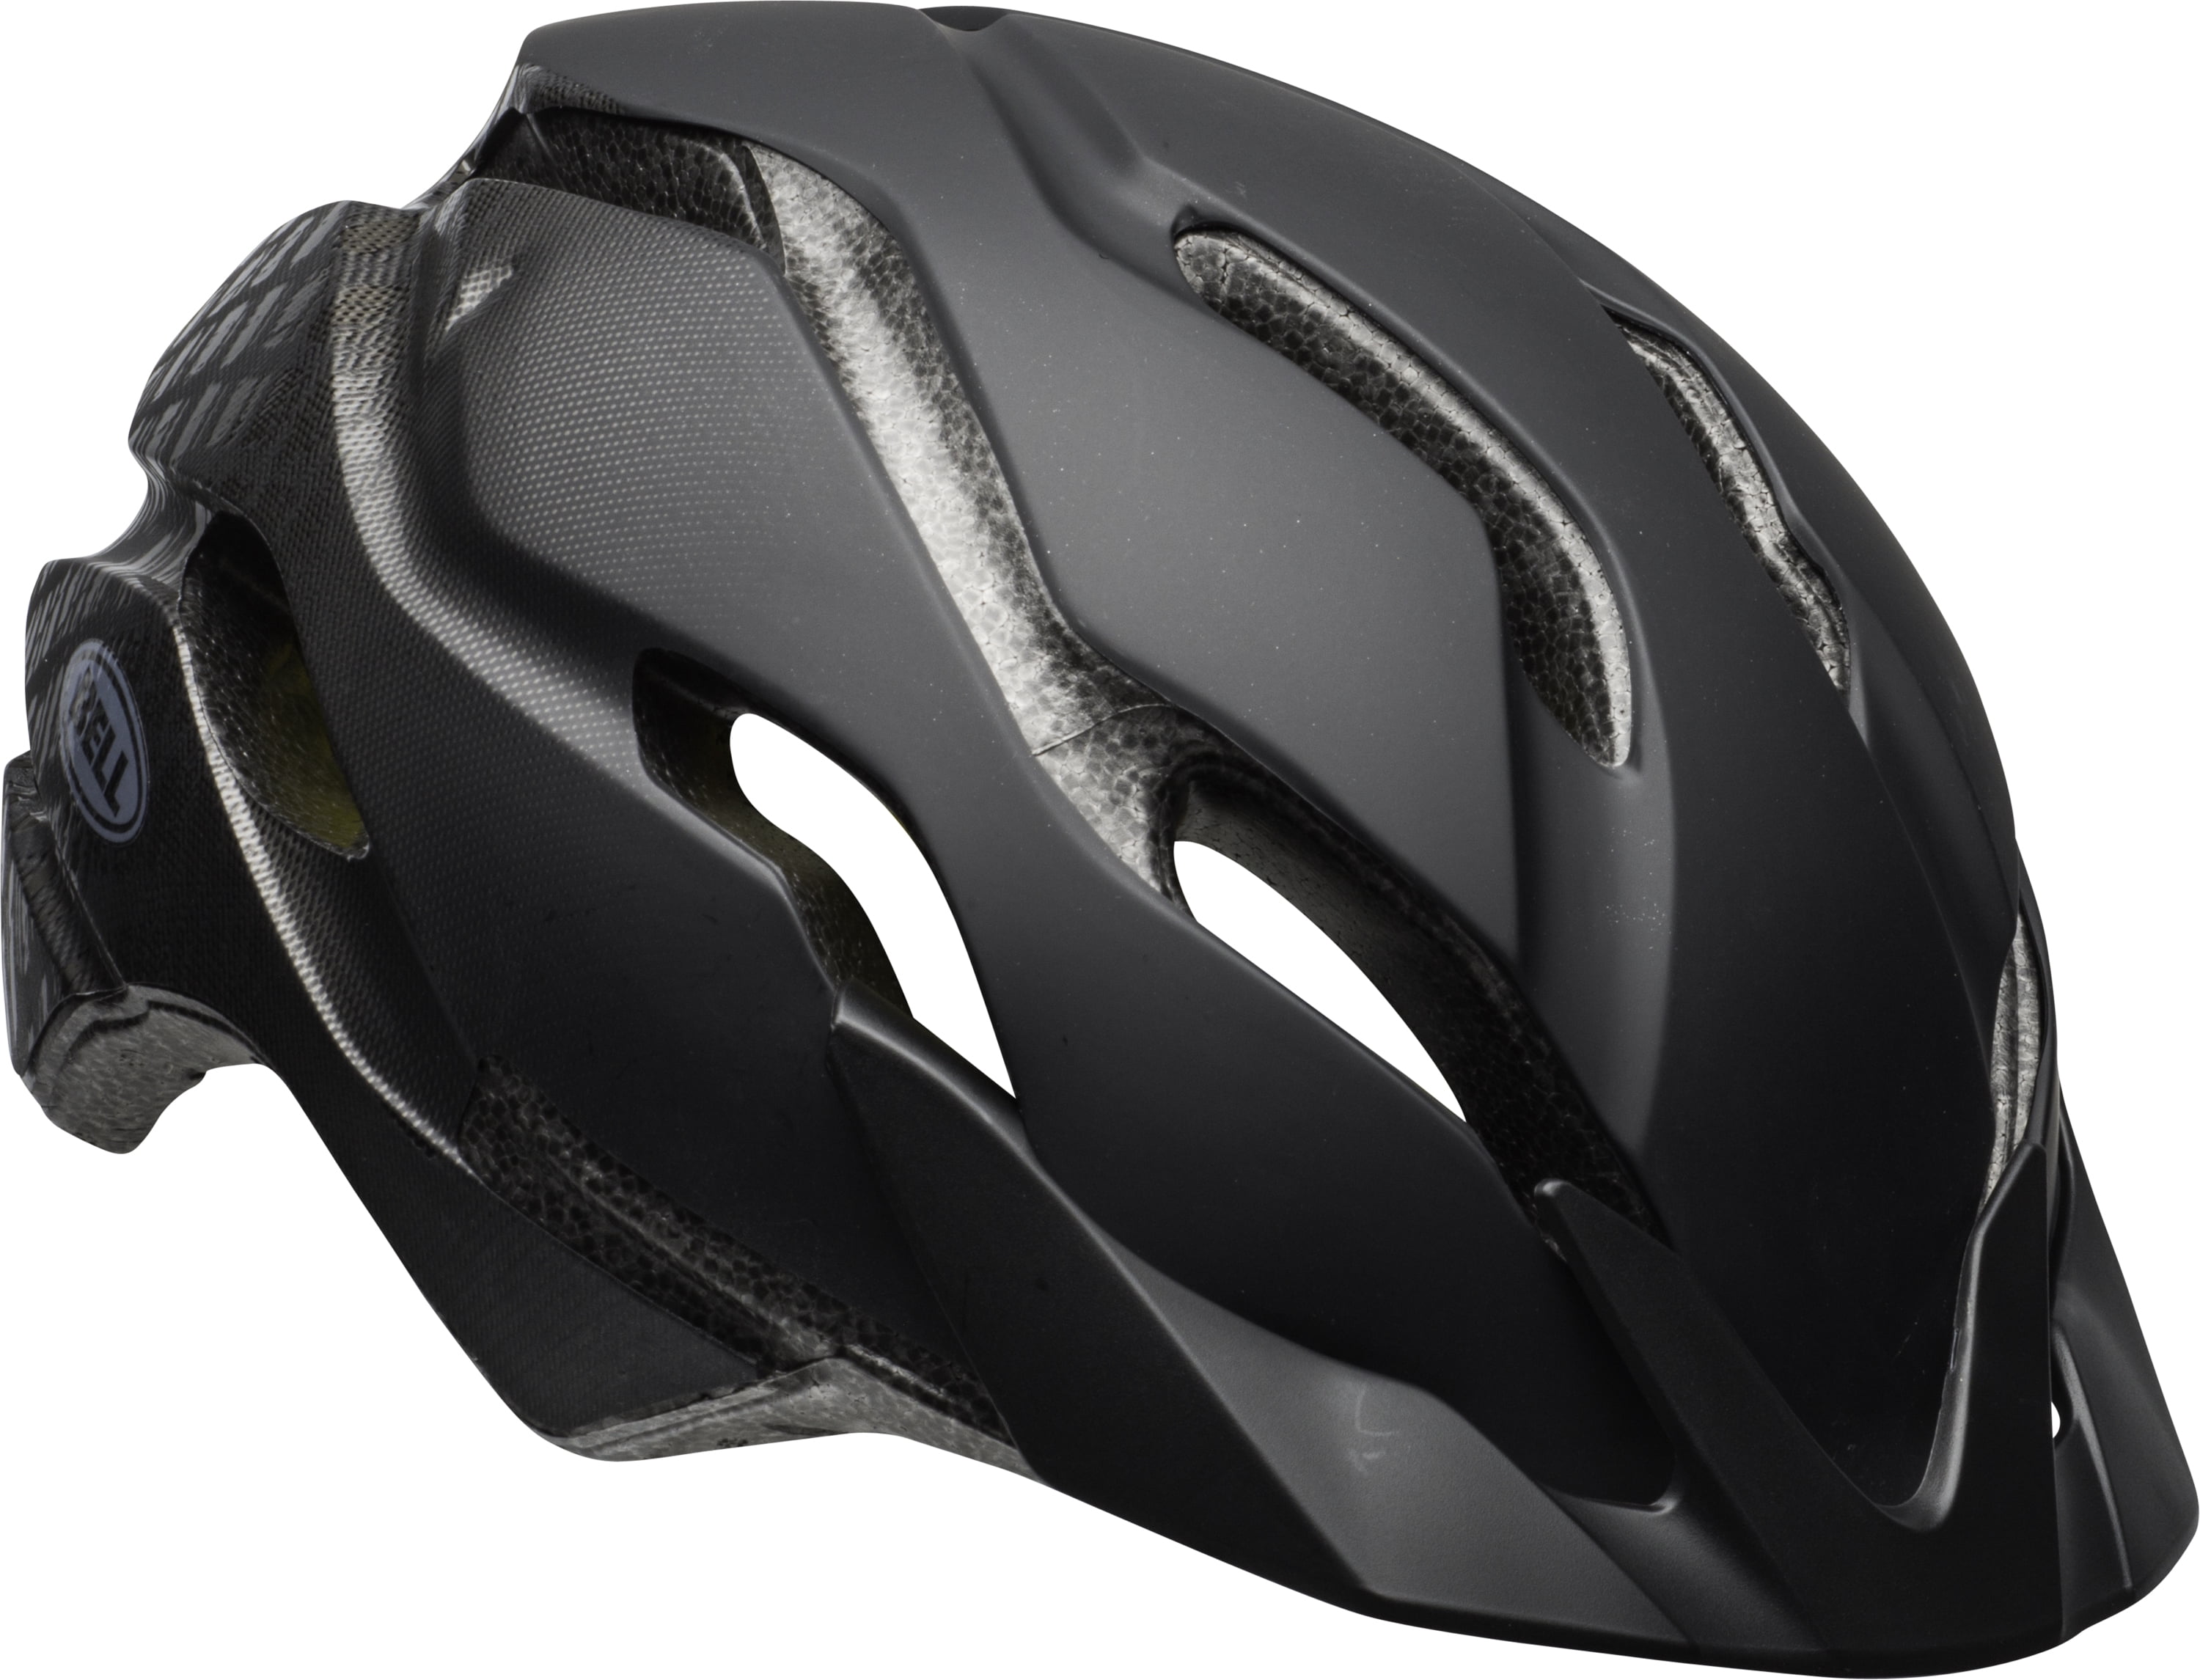 matte black bike helmet